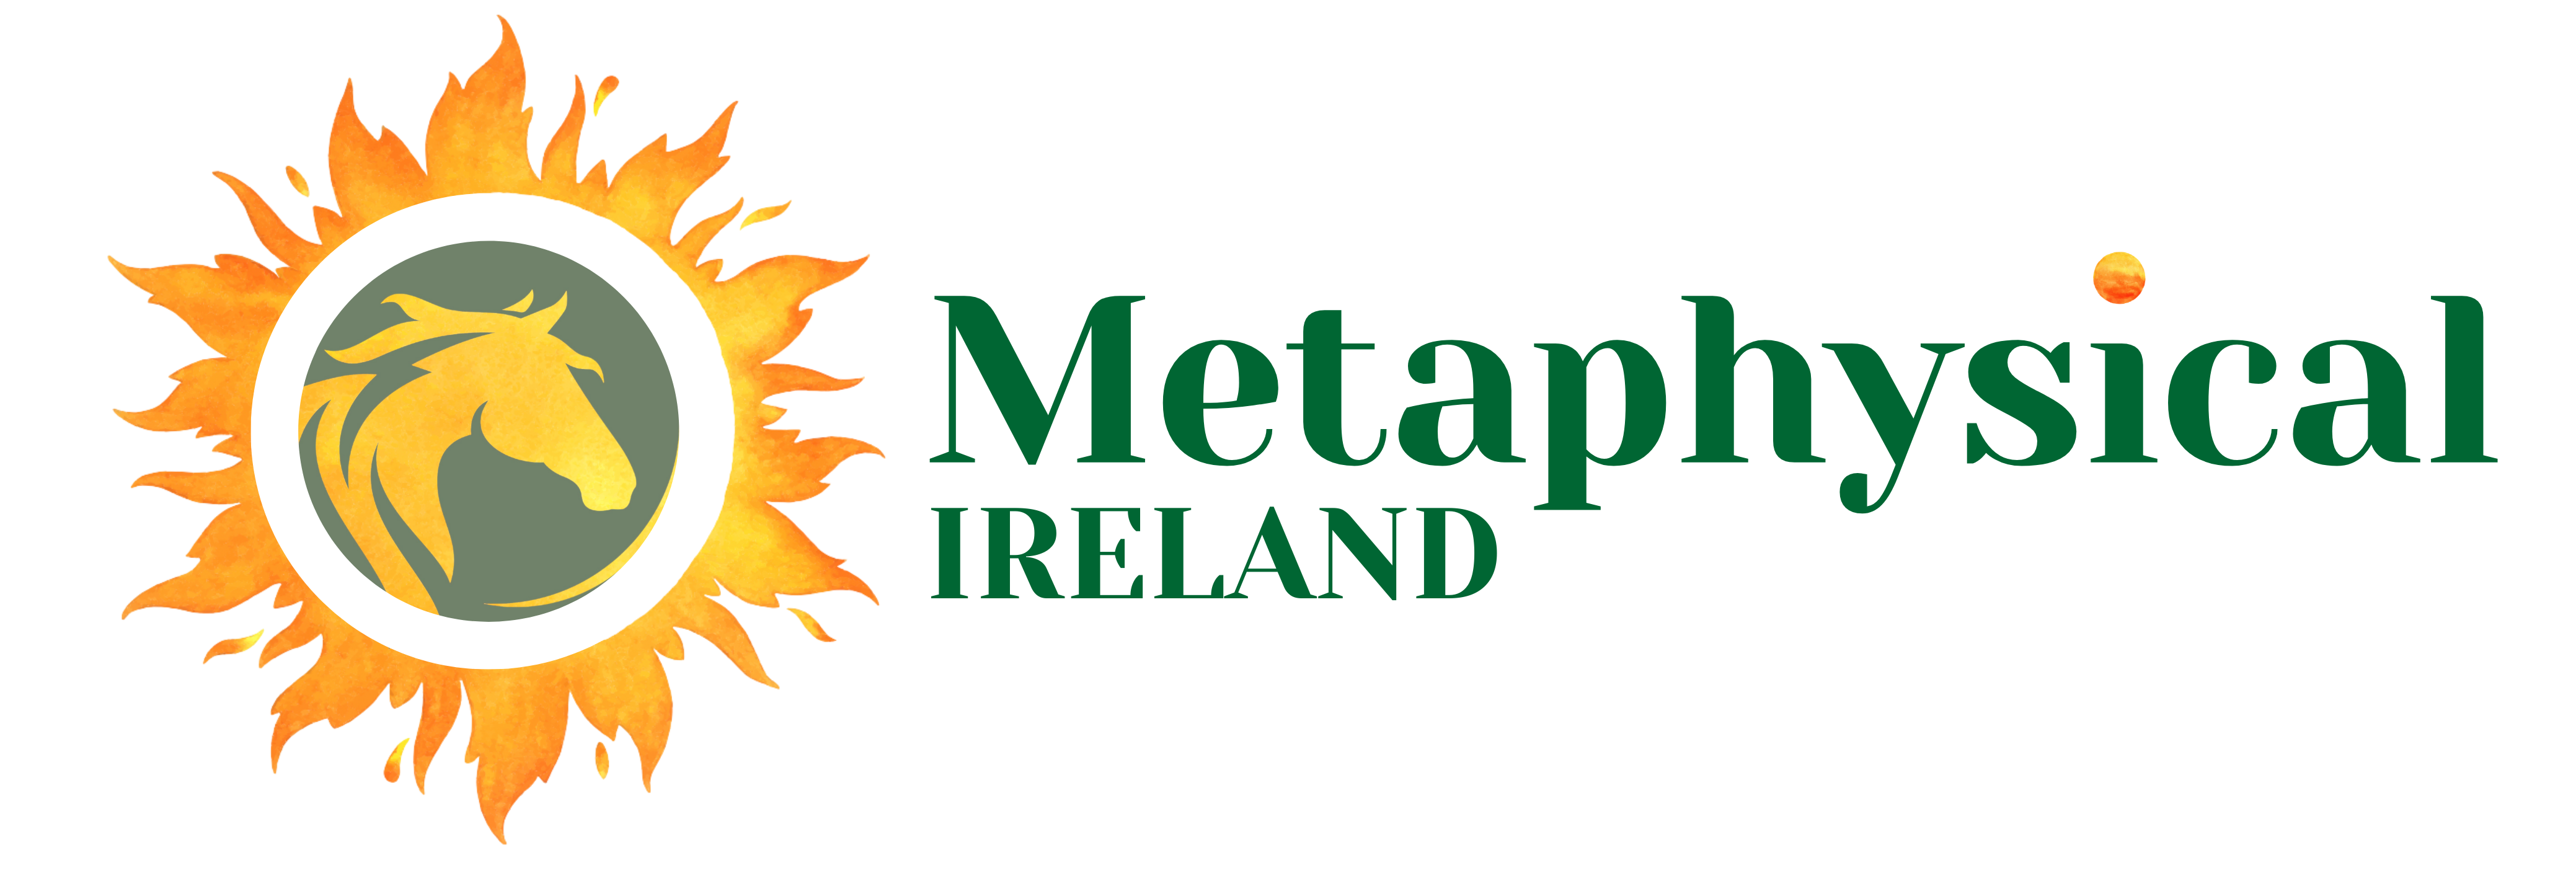 Metaphysical Ireland: Intuitive Development Workshop 